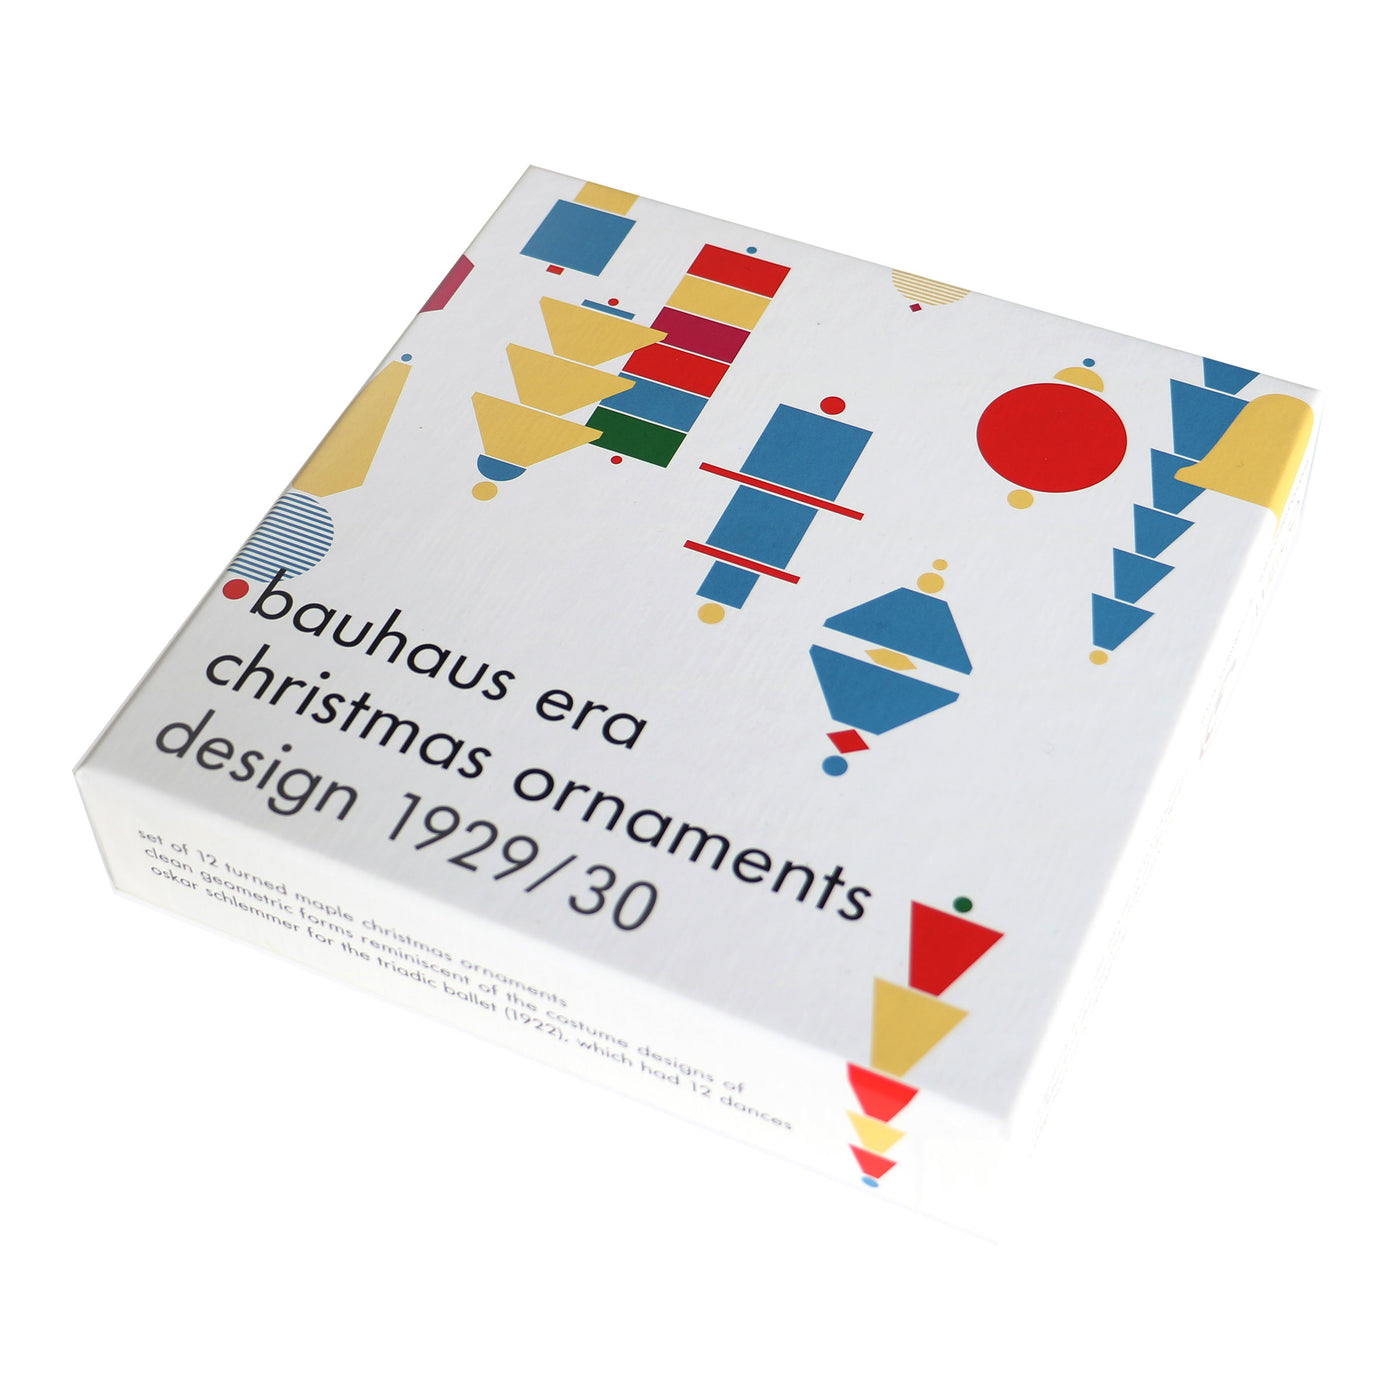 12 Bauhaus-era Christmas Ornaments